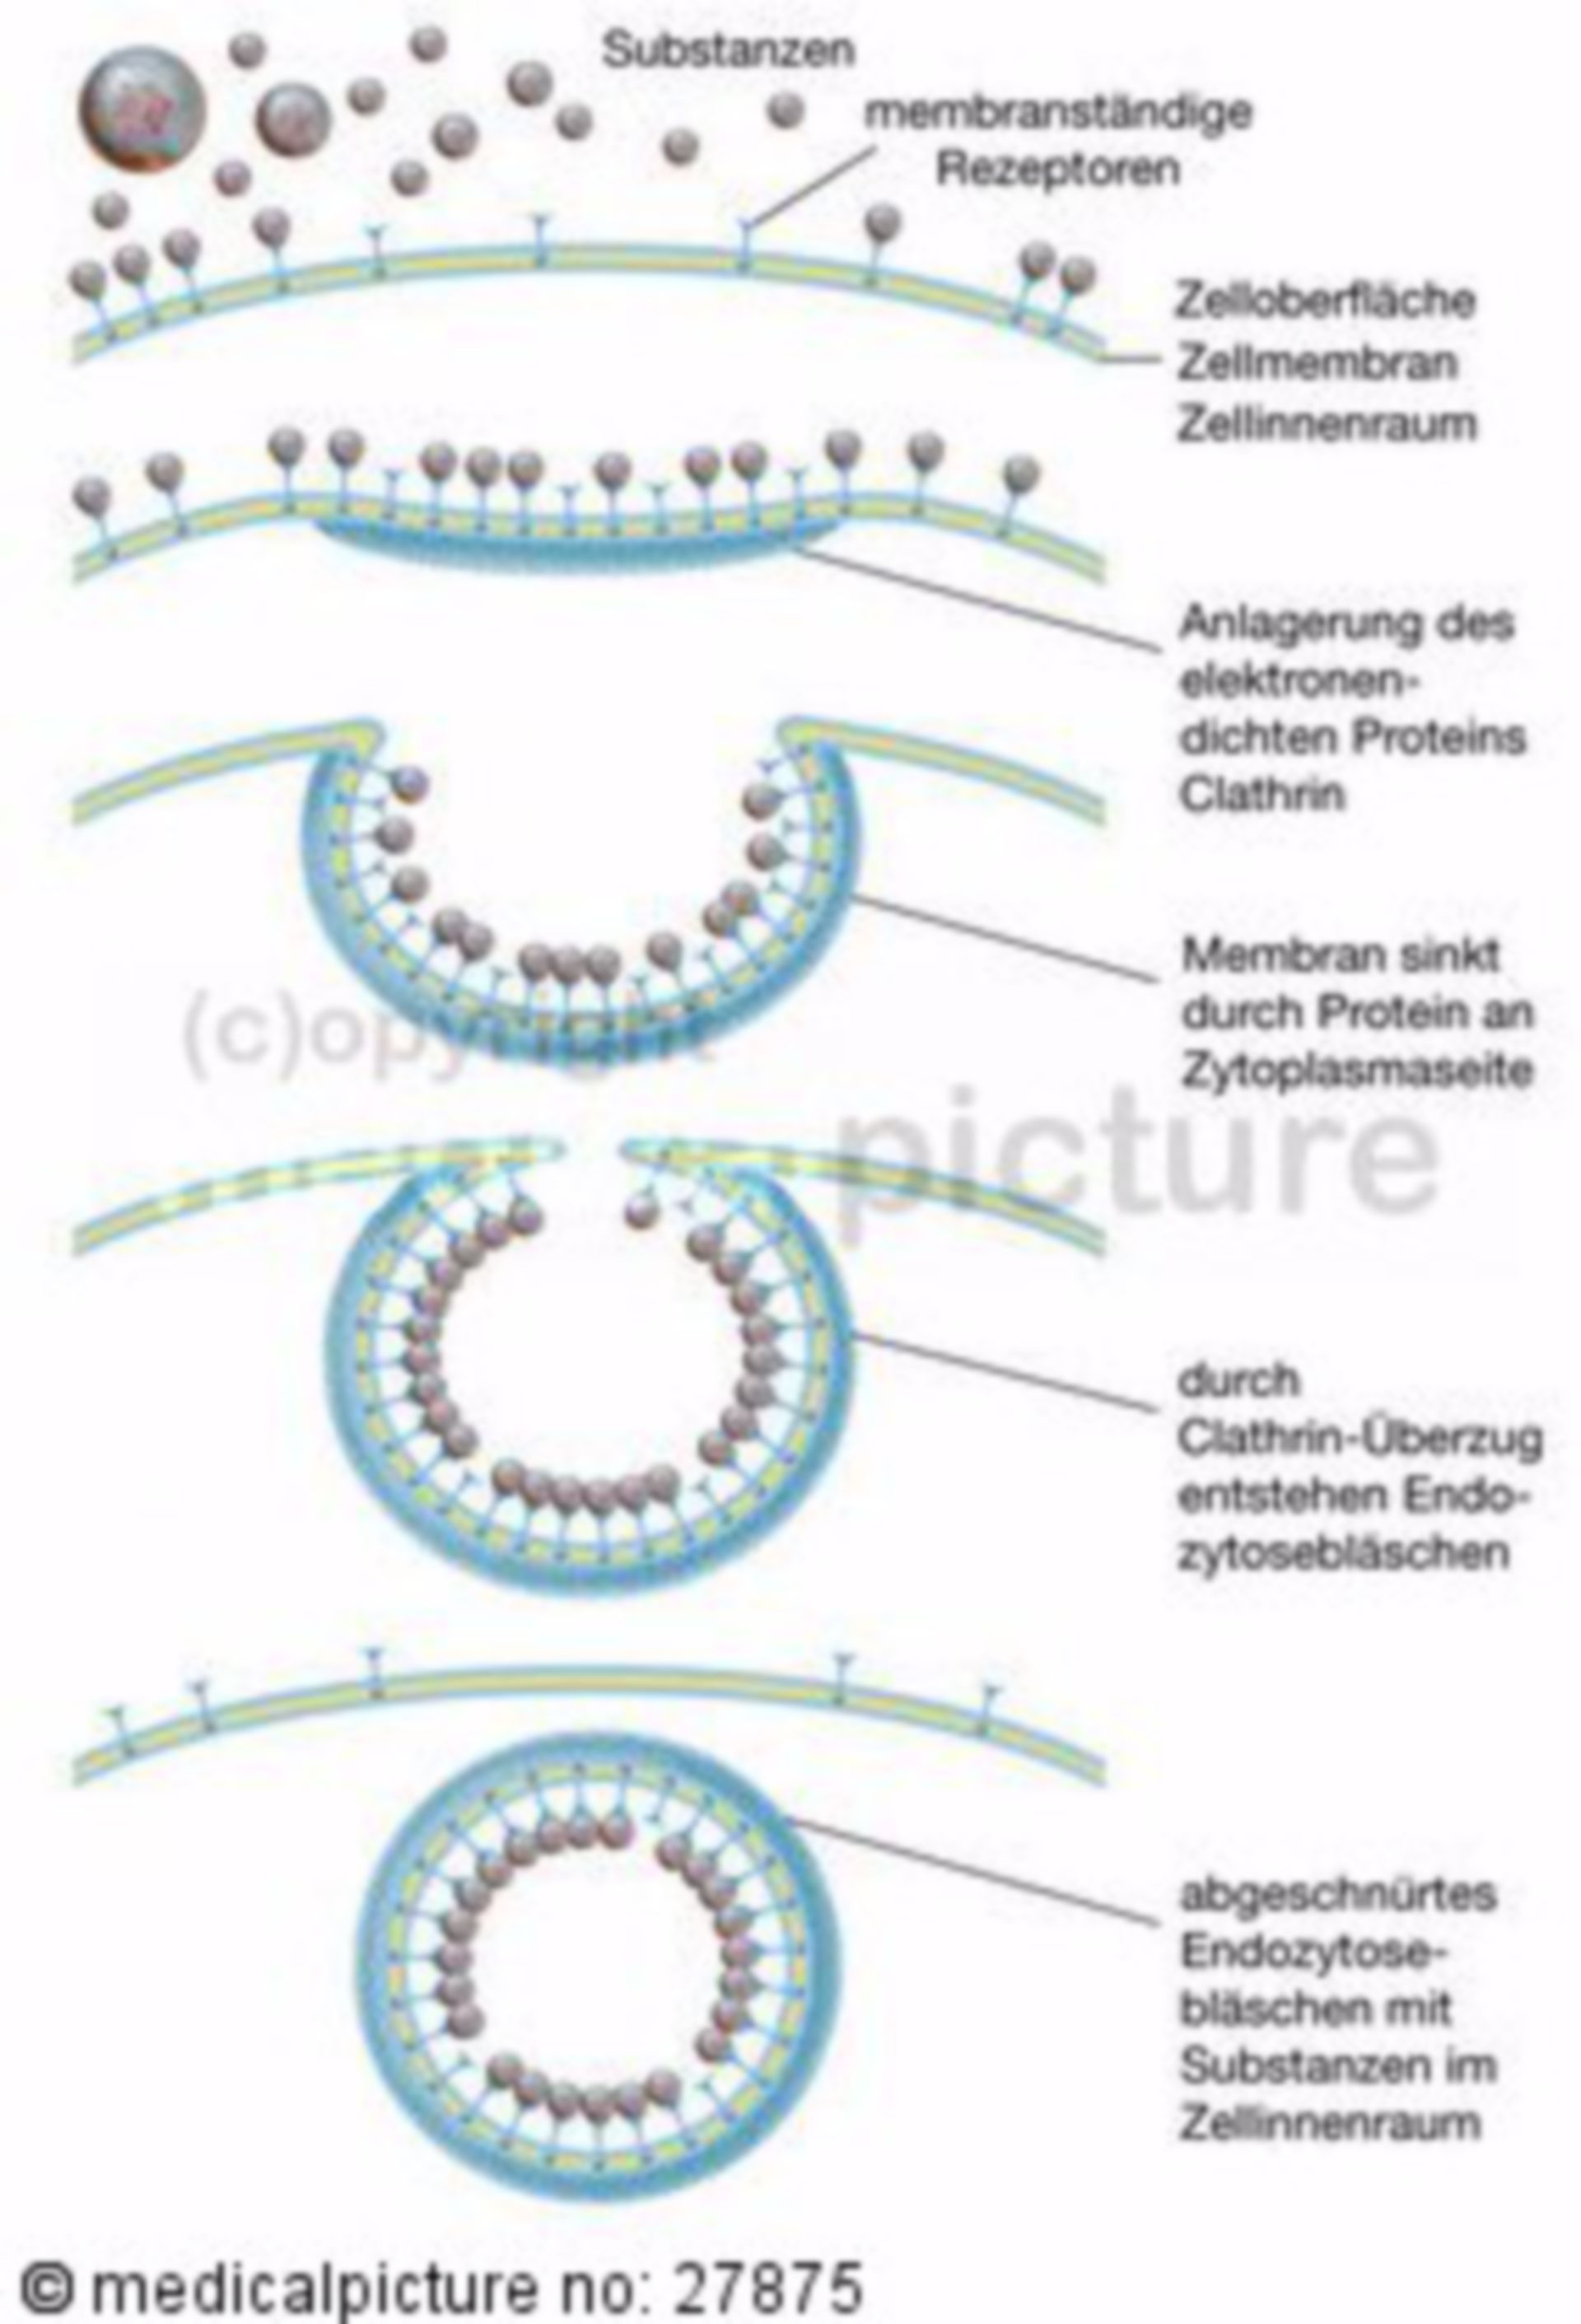 Rezeptorvermittelte Endozytose